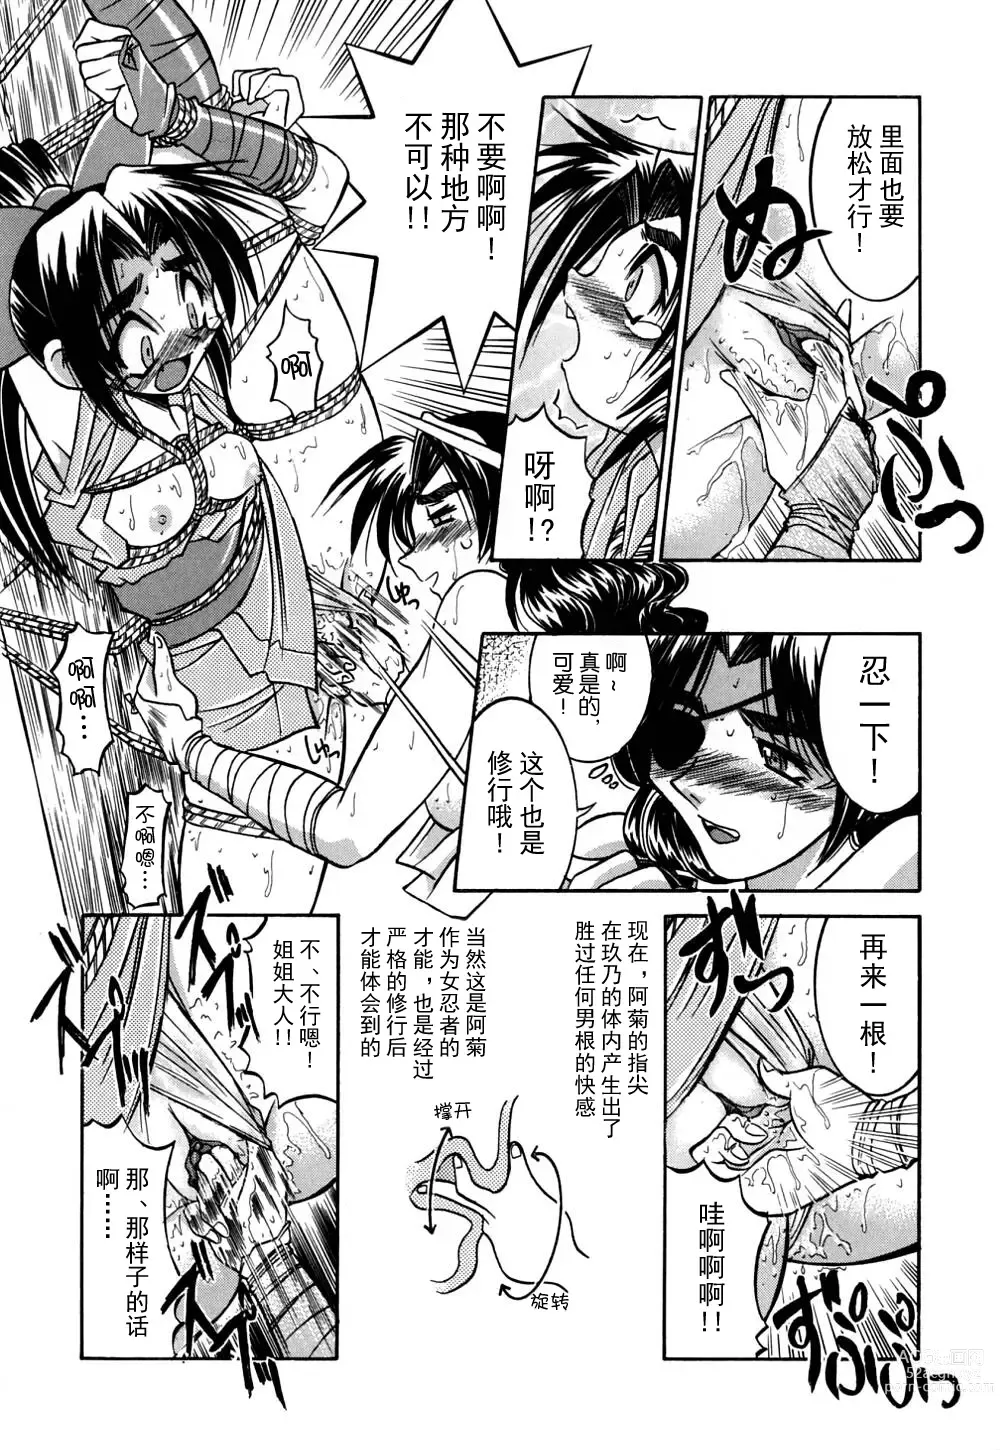 Page 167 of manga Ground Ero